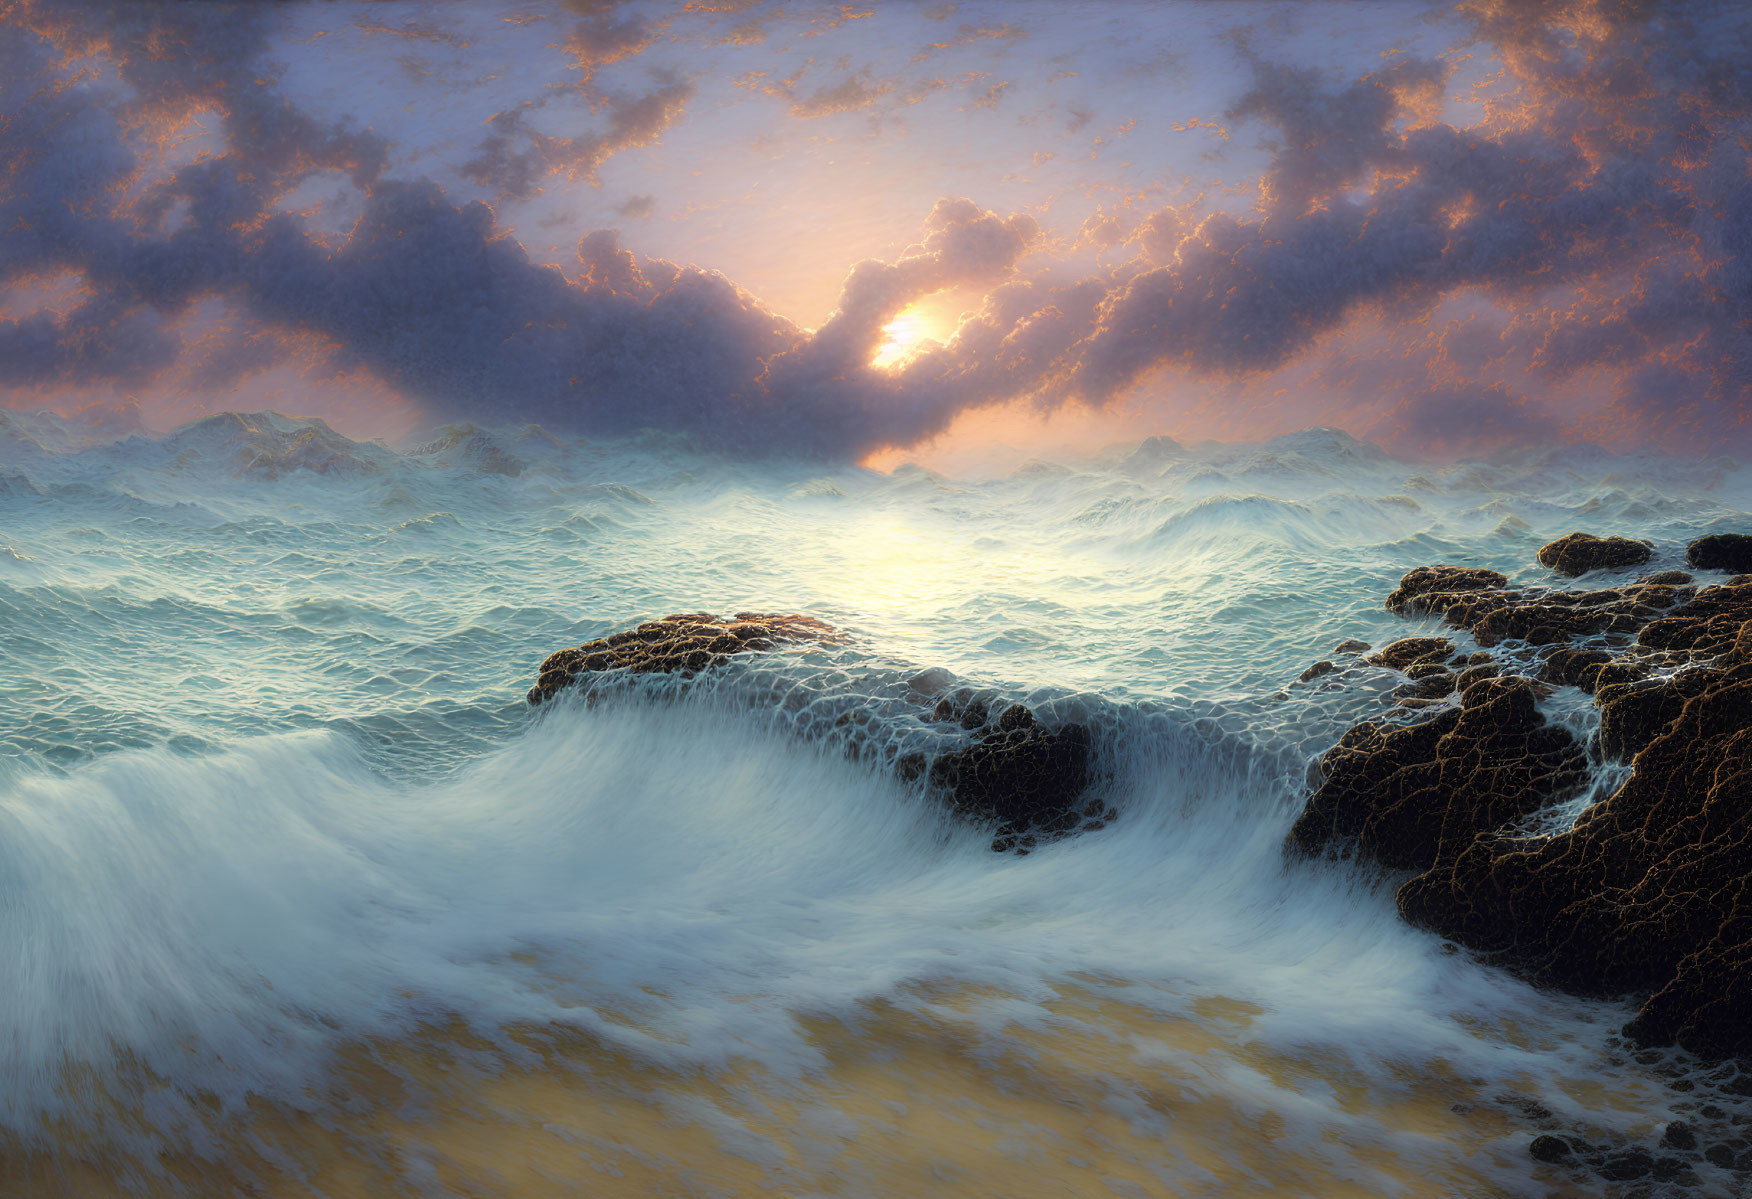 Dramatic seascape with crashing waves and sunset sky